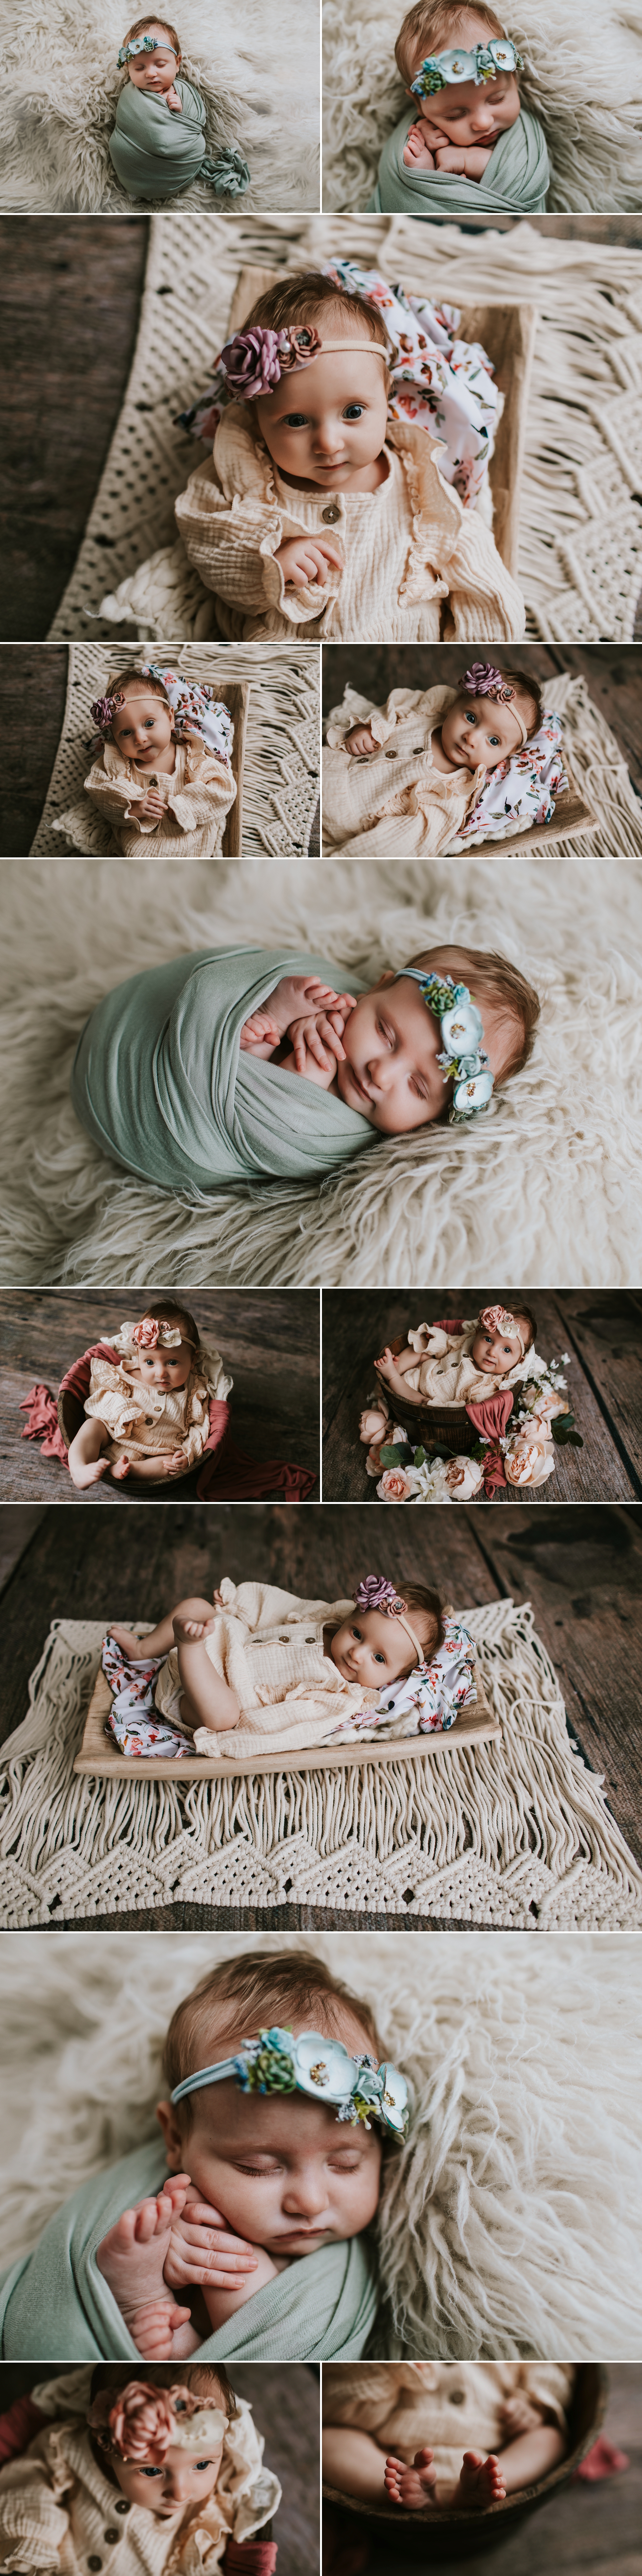 8 week newborn session floral headbands macrame baby girl furry rugs boho photographer 63090